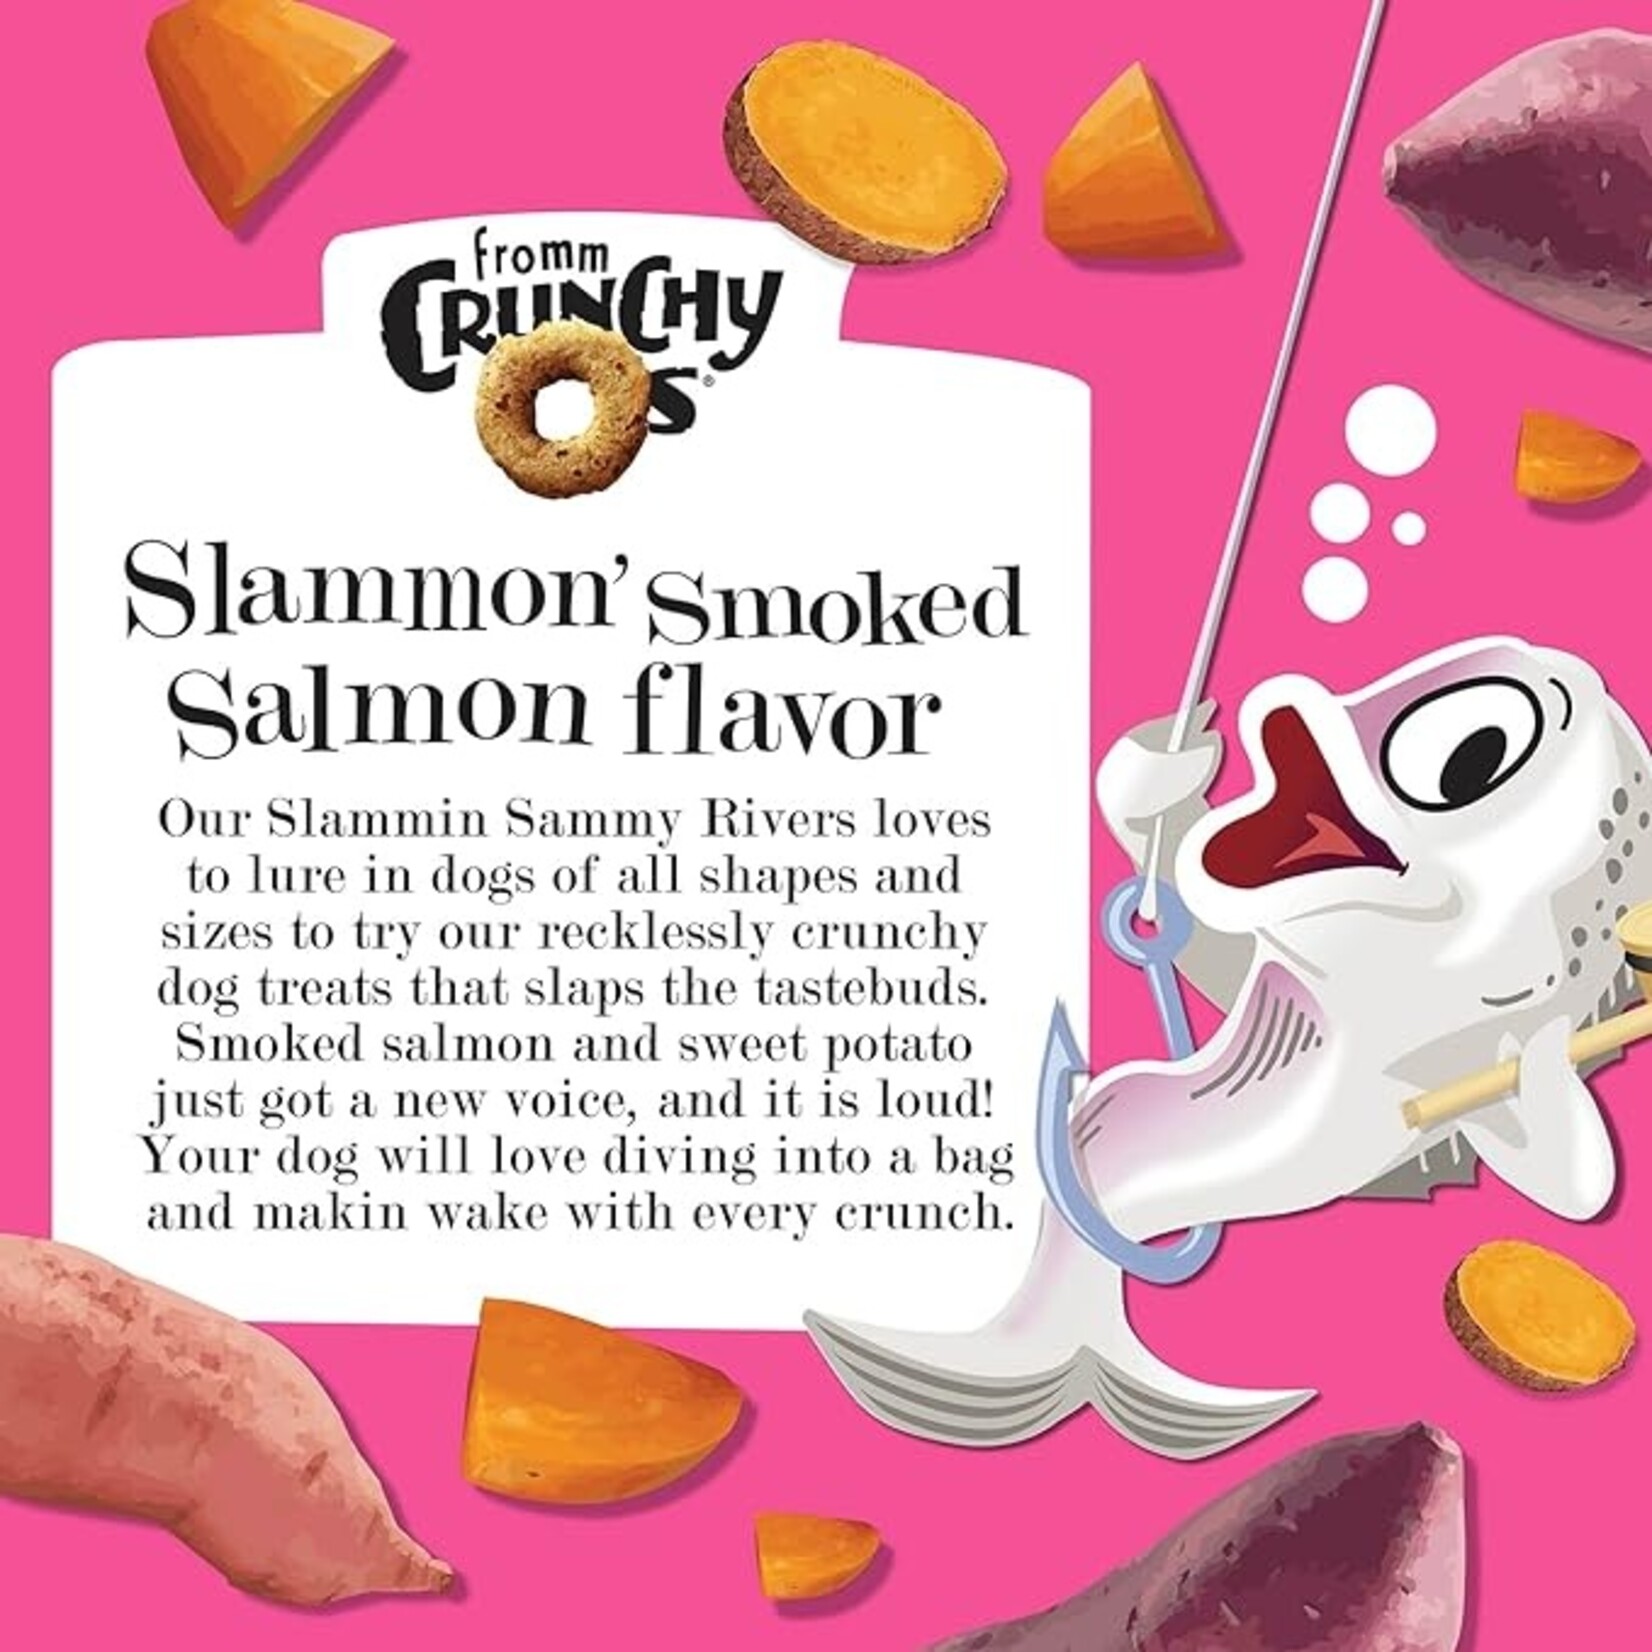 Fromm Fromm Crunchy O's Slammon Smoked Salmon 26oz